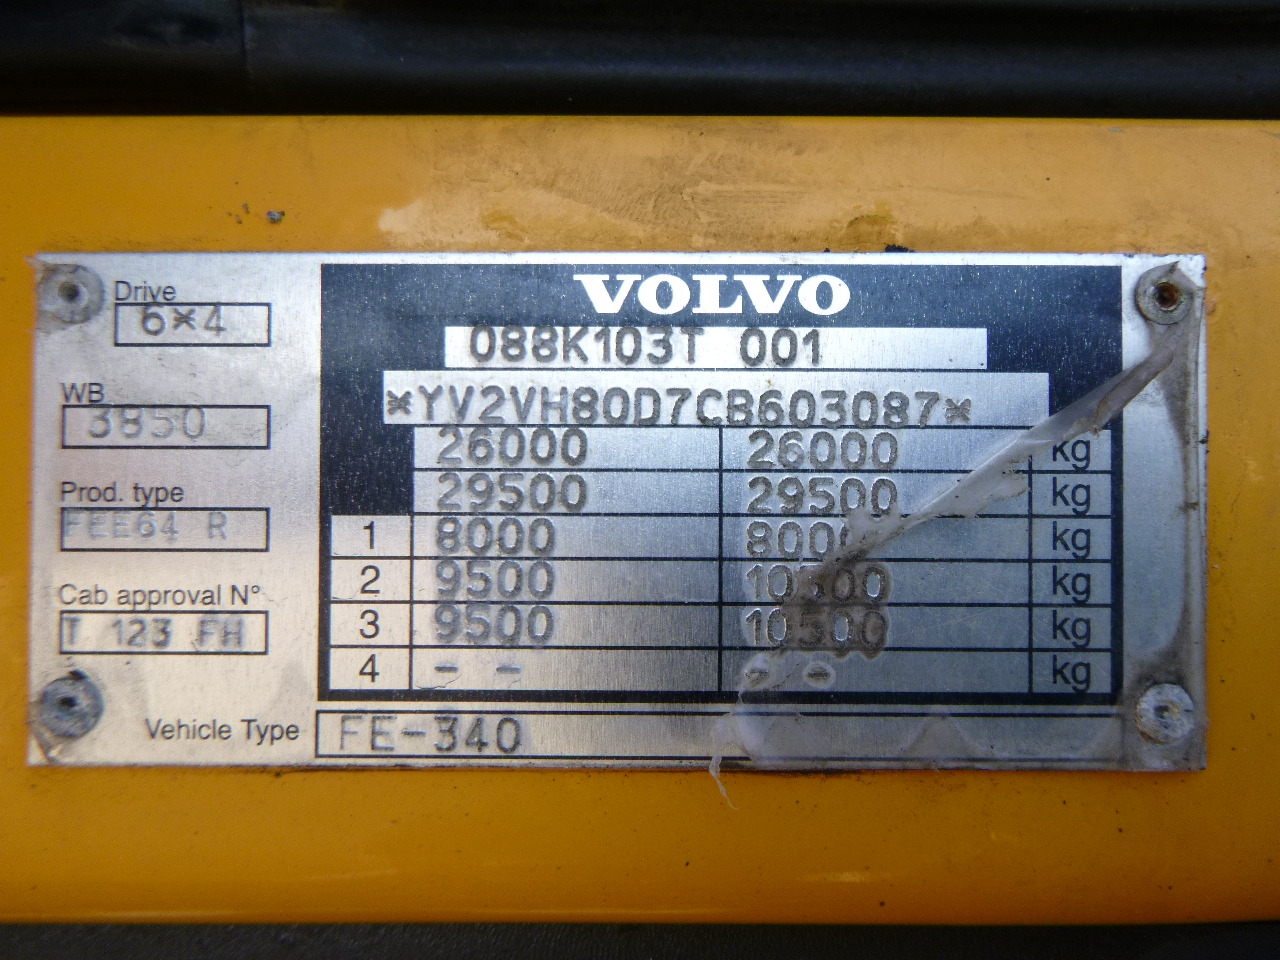 Vakuumski tovornjak Volvo FE 340 6x4 RHD salt spreader / gritter: slika 34